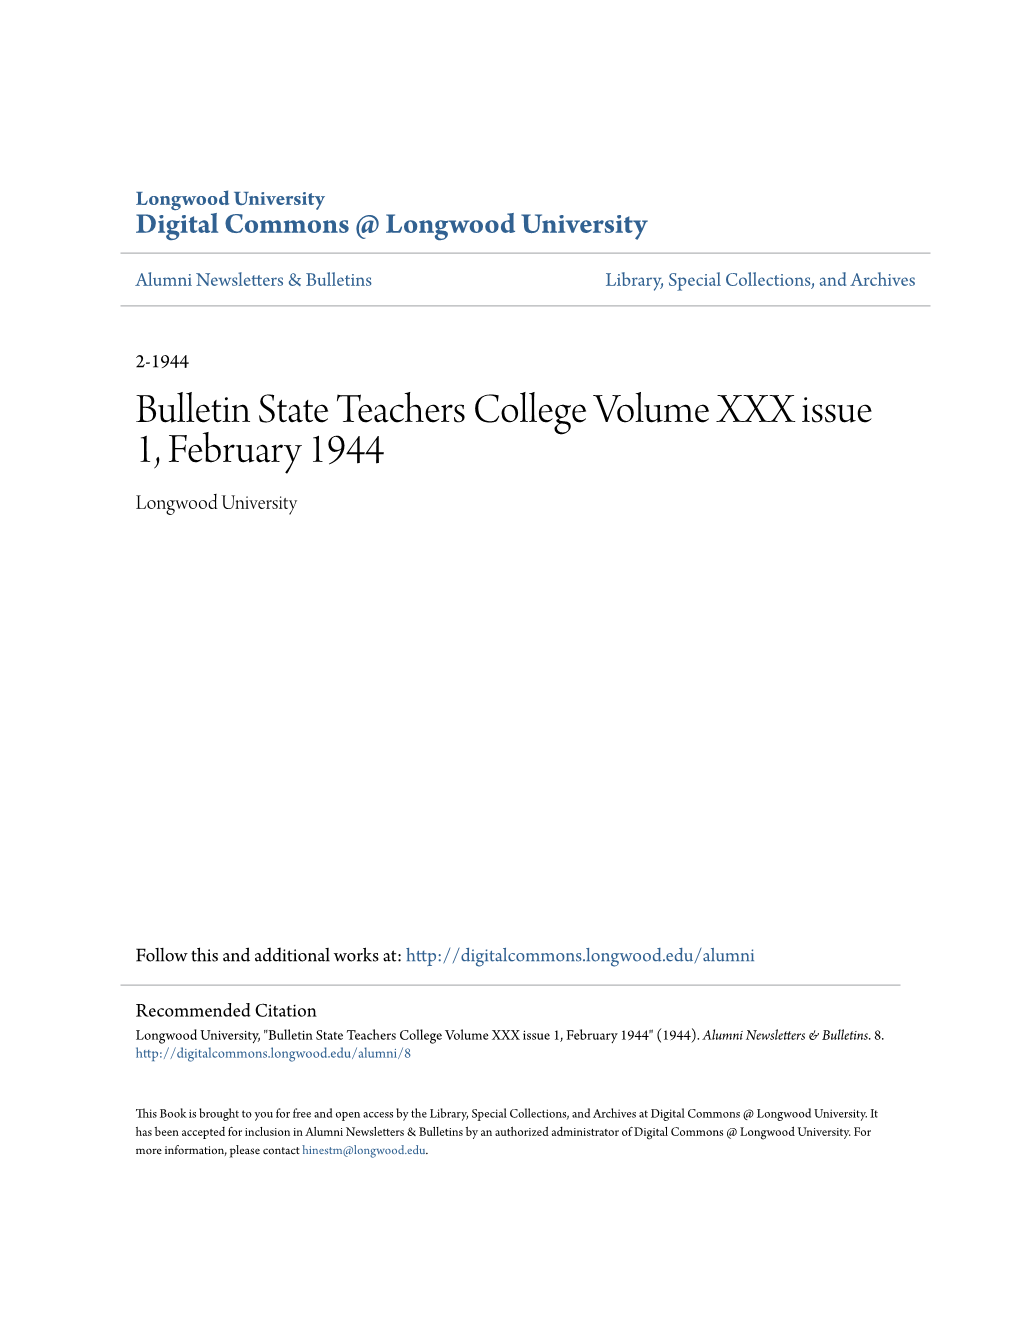 Bulletin State Teachers College Volume XXX Issue 1, February 1944 Longwood University